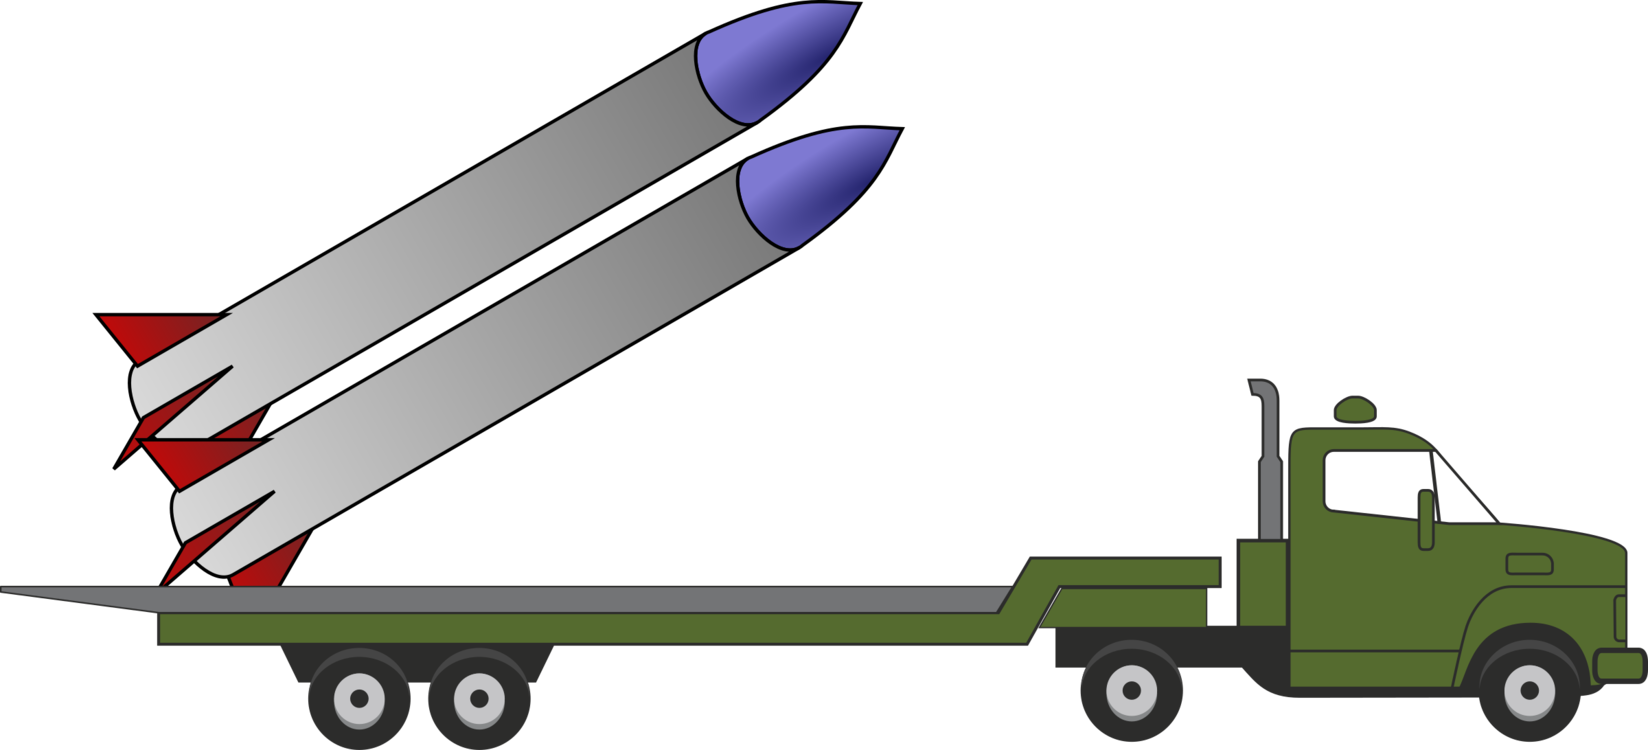 Car,Freight Transport,Motor Vehicle